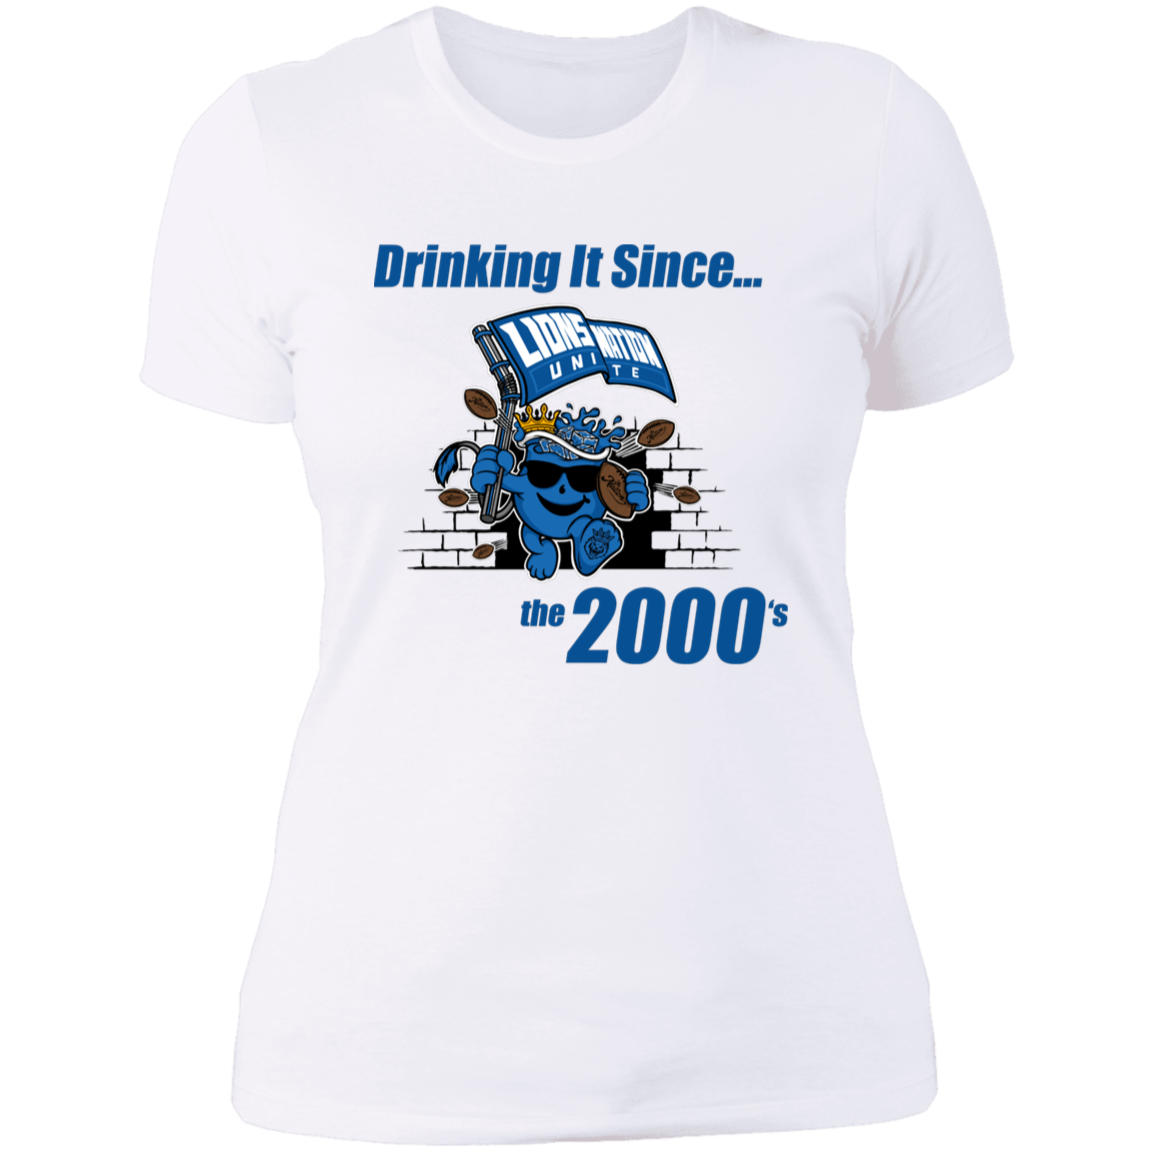 Drinking It Since the 2000's Women's T-Shirt